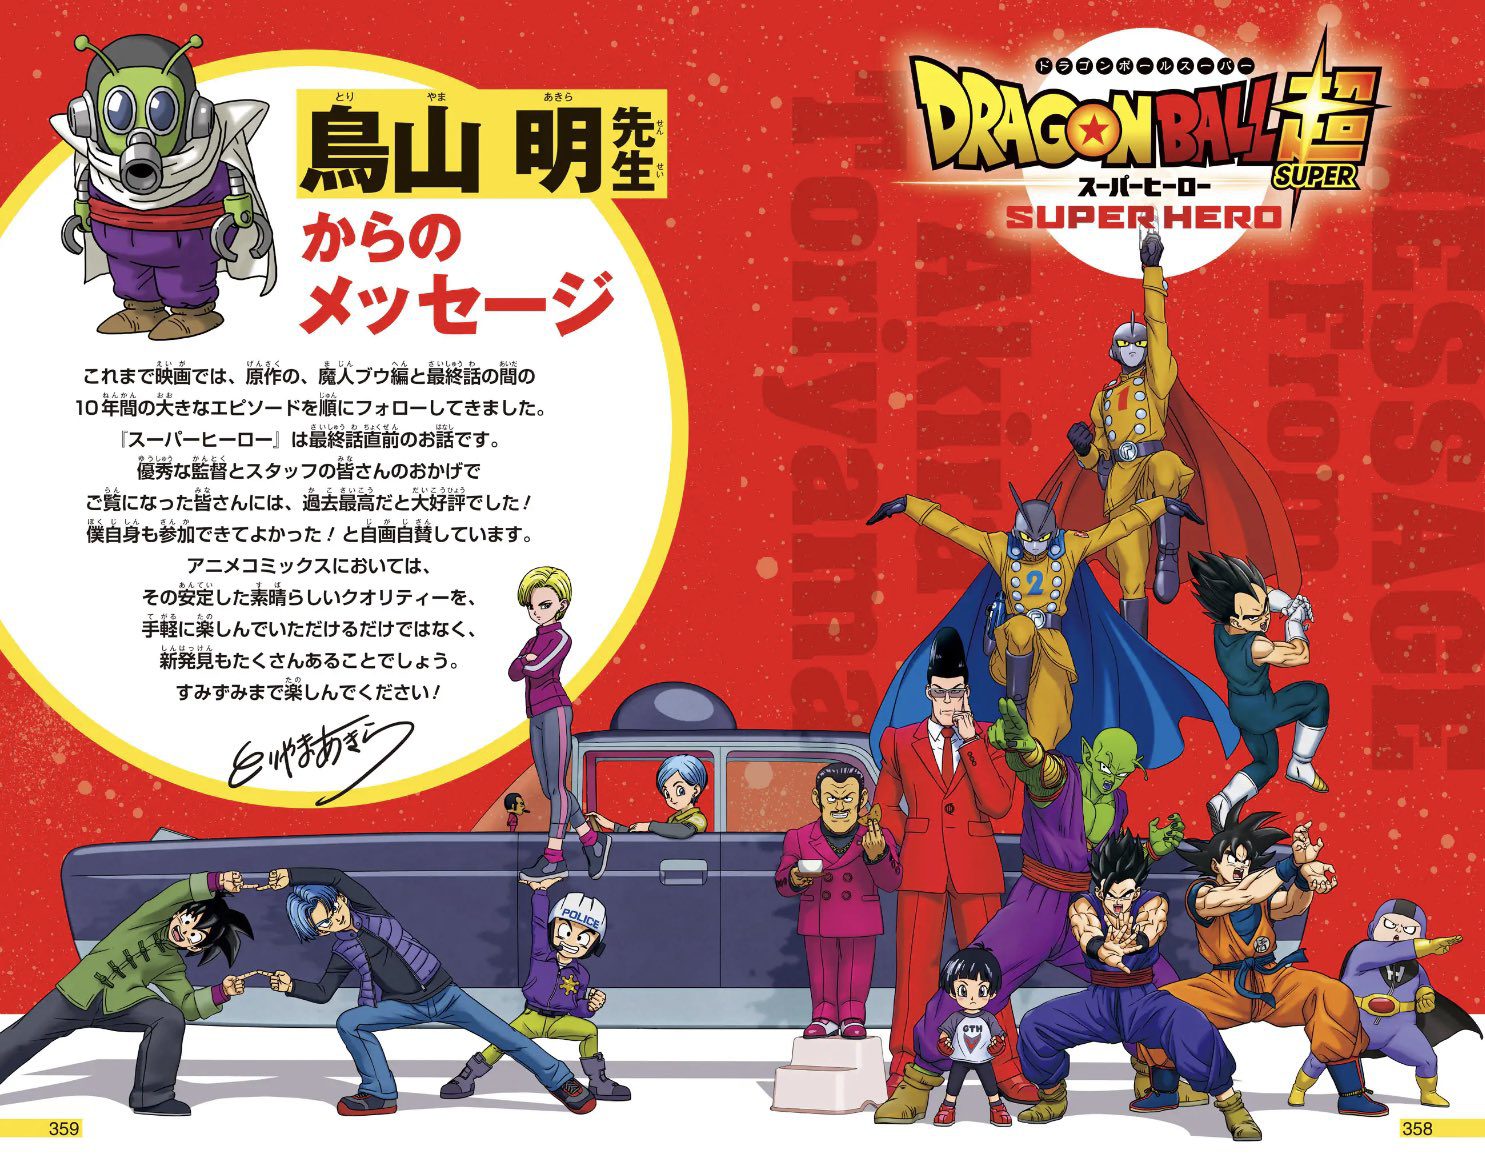 Toriyama's comments for Dragon Ball Super: Super Hero Anime Comic